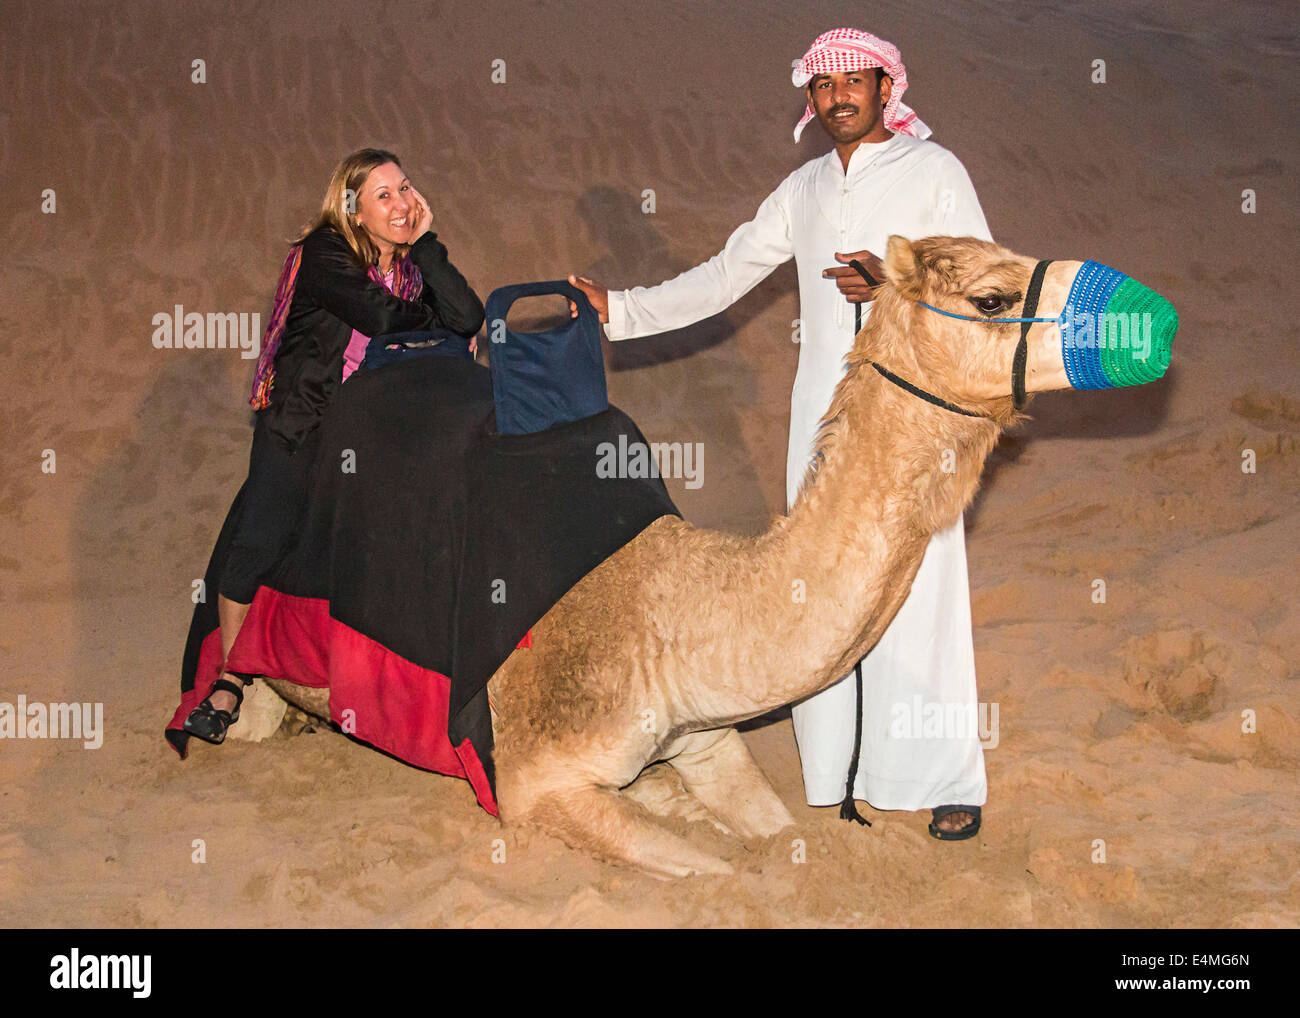 Camel riding at Bedouin camp during desert safari in Dubai, UAE. Stock Photo